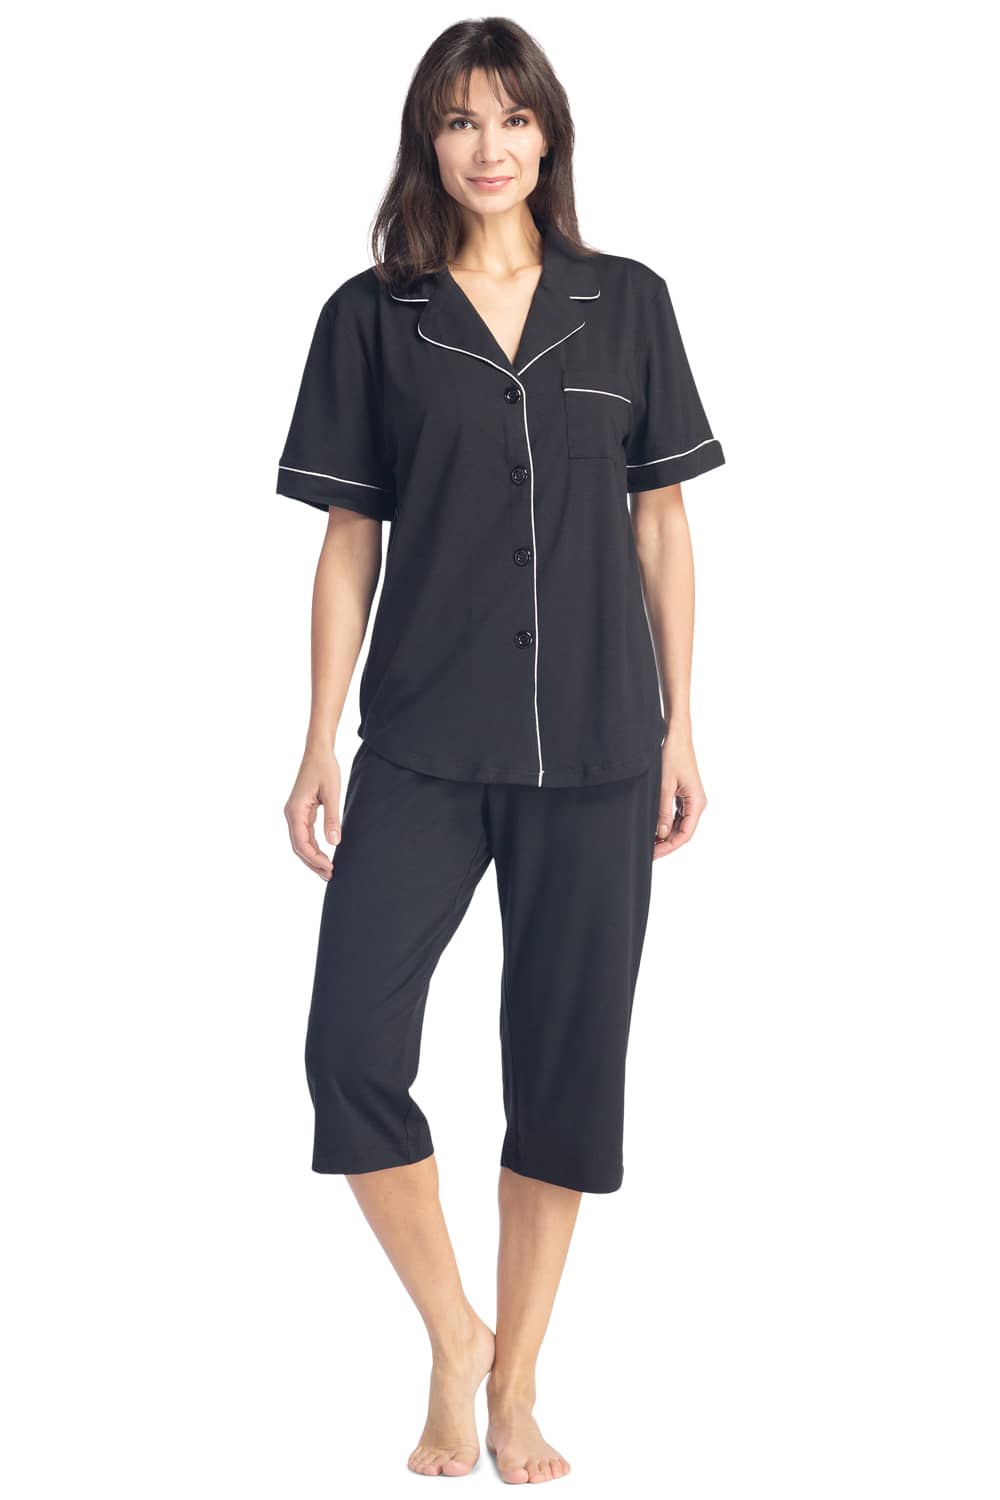 Women's EcoFabric™ Capri Pajama Set with Gift Box Womens>Sleep and Lounge>Pajamas Fishers Finery Black Large 